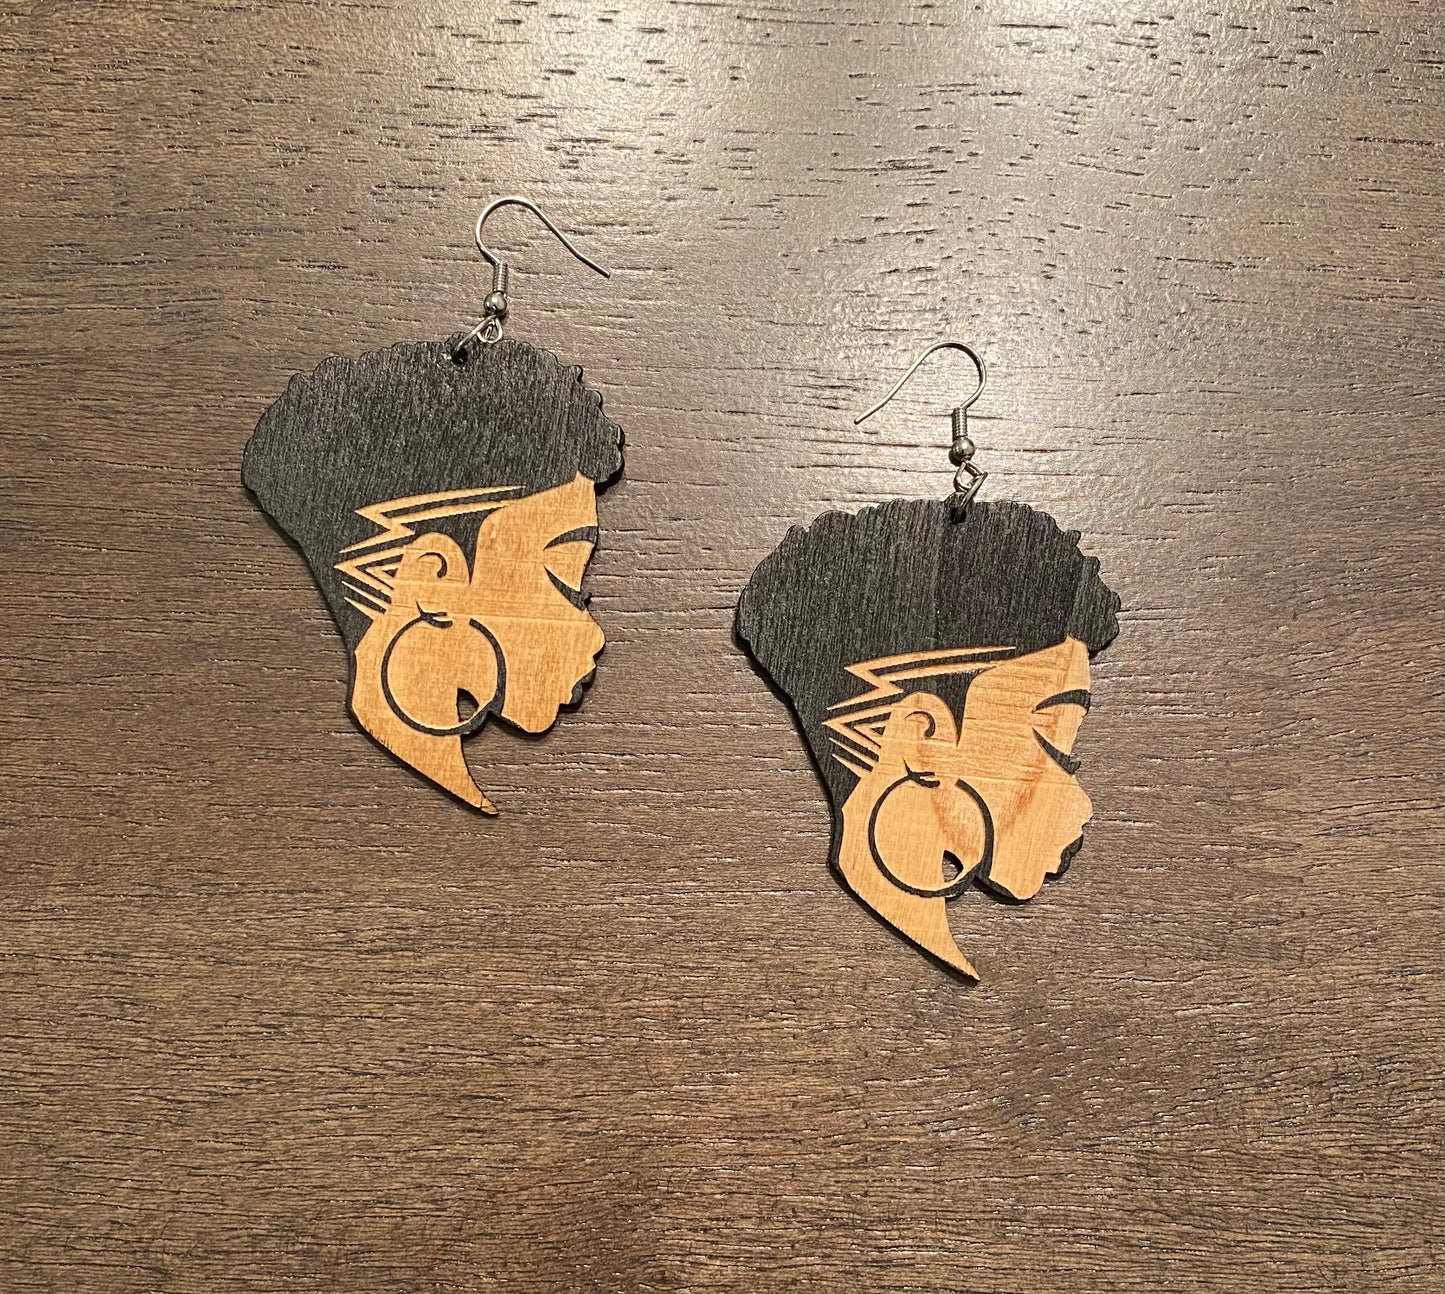 Sista Queen Earrings